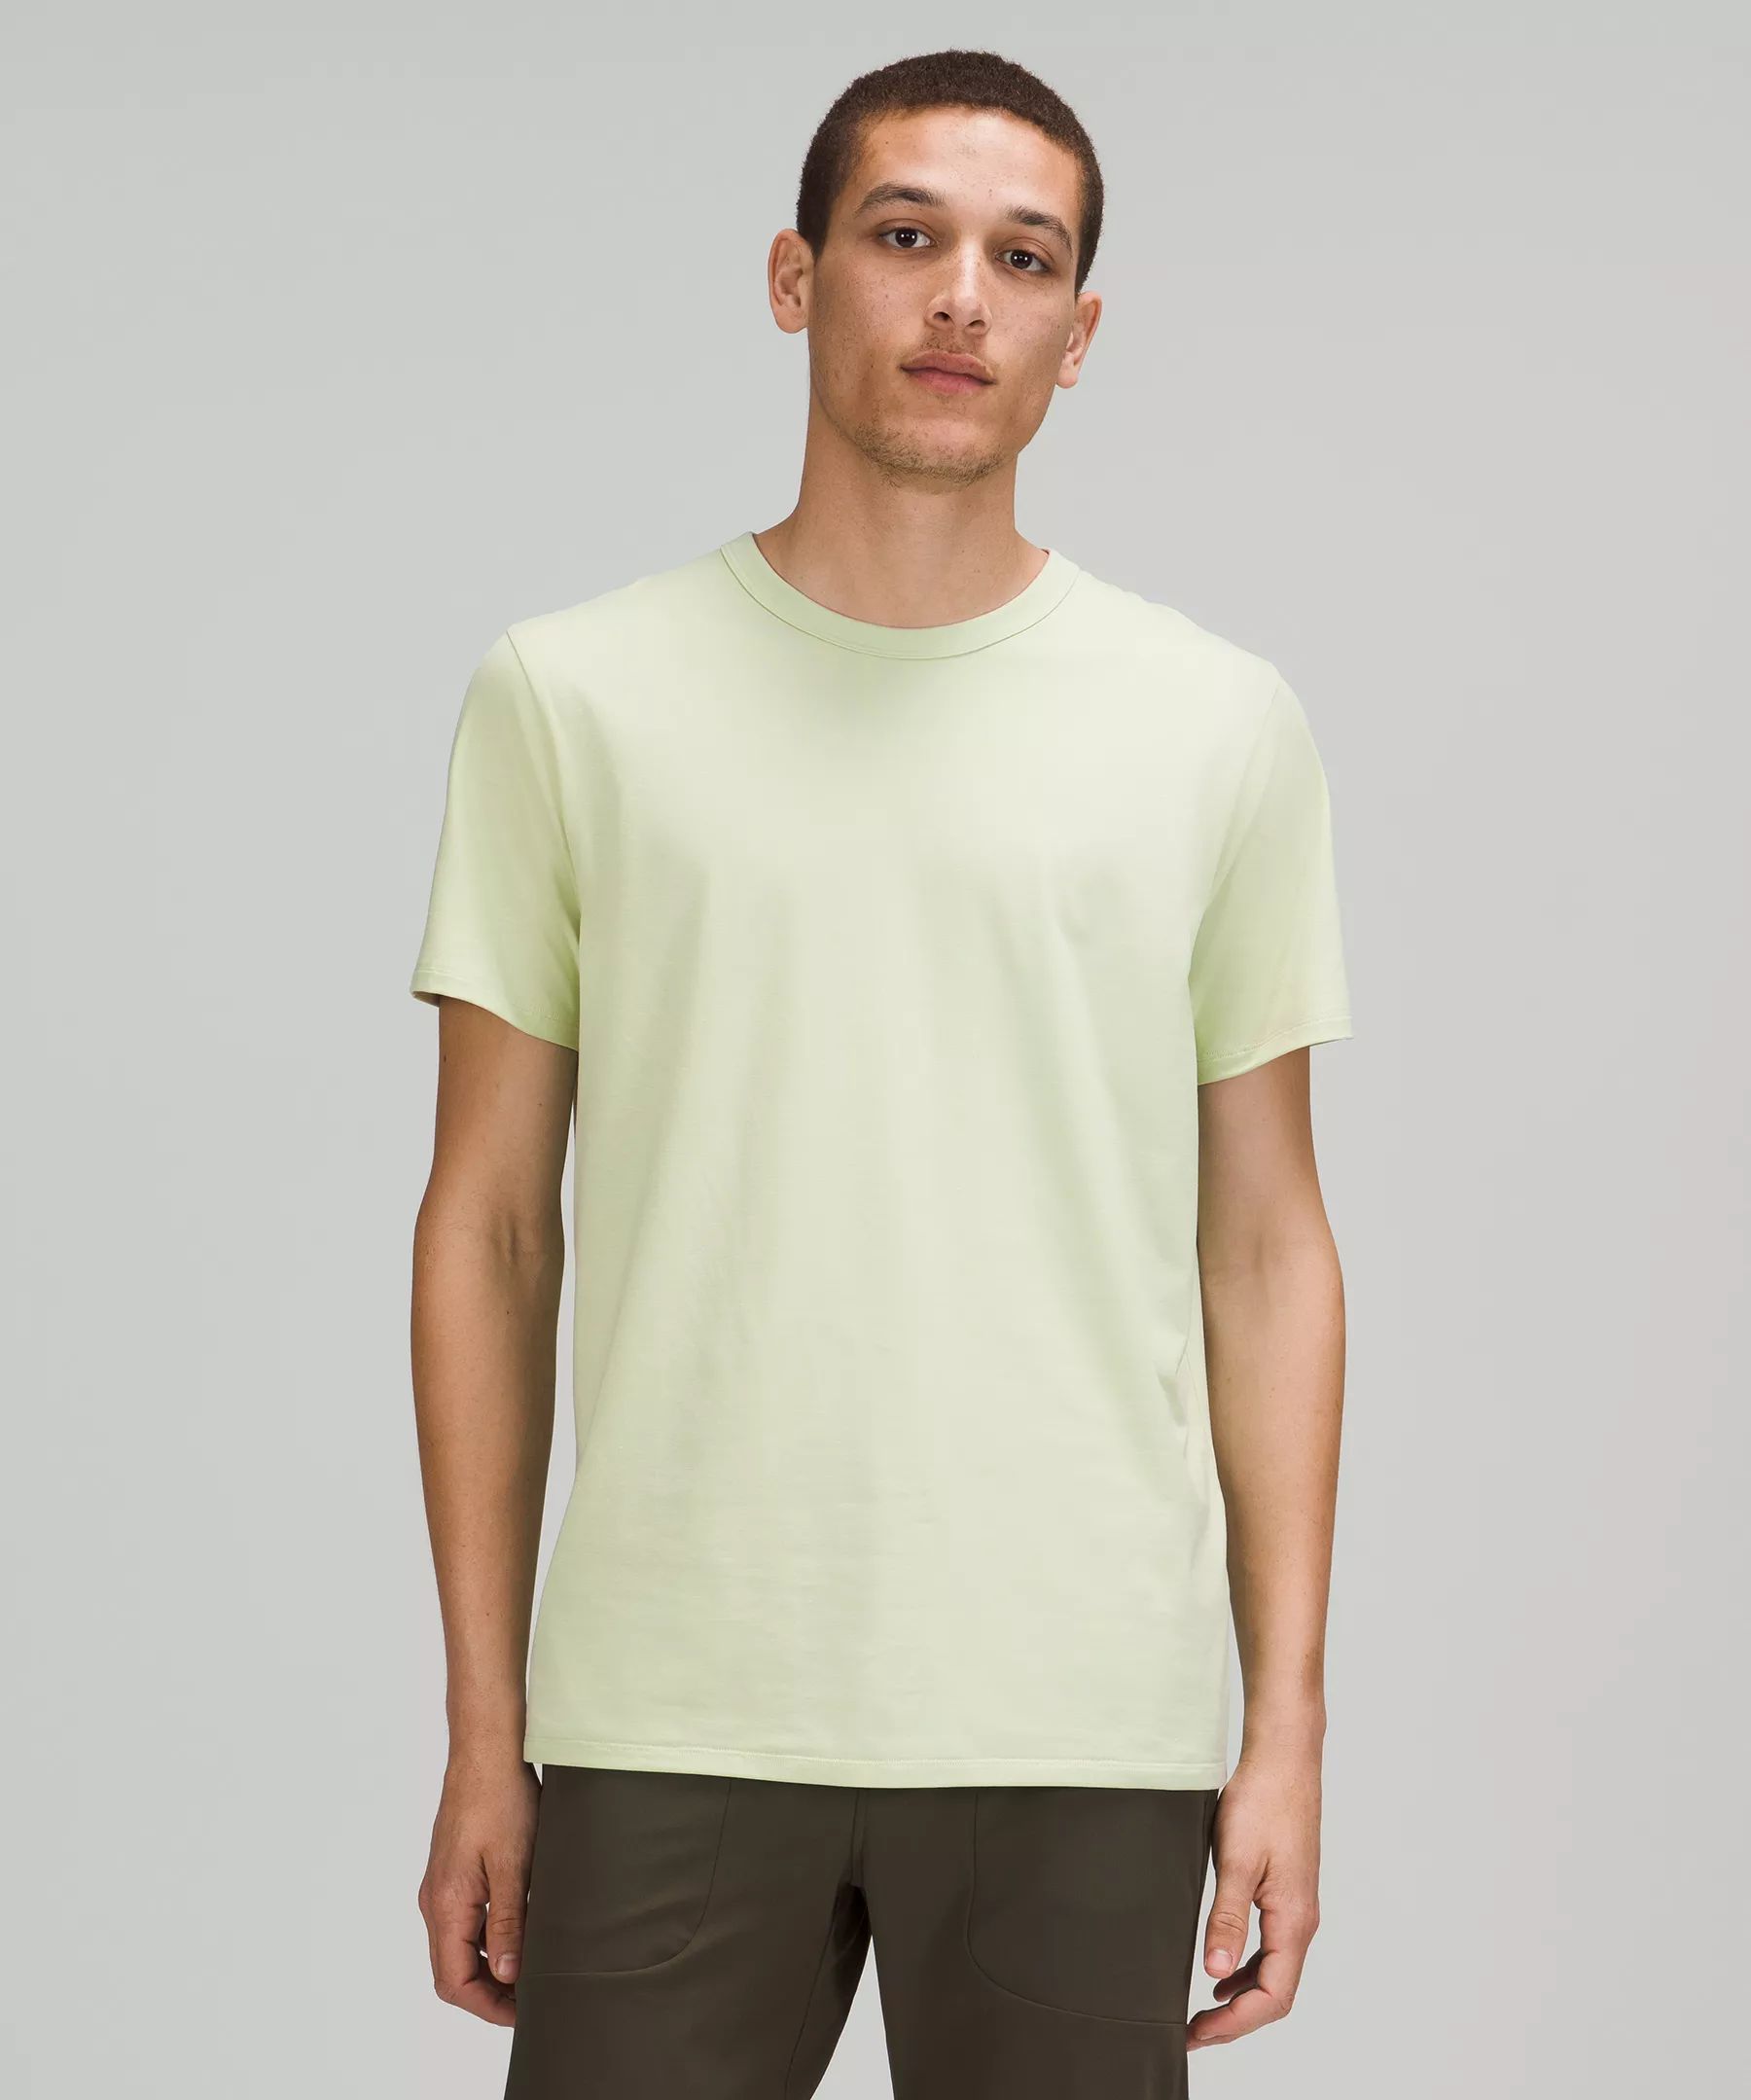 The Fundamental T-Shirt | Men's Short Sleeve Shirts & Tee's | lululemon | Lululemon (US)